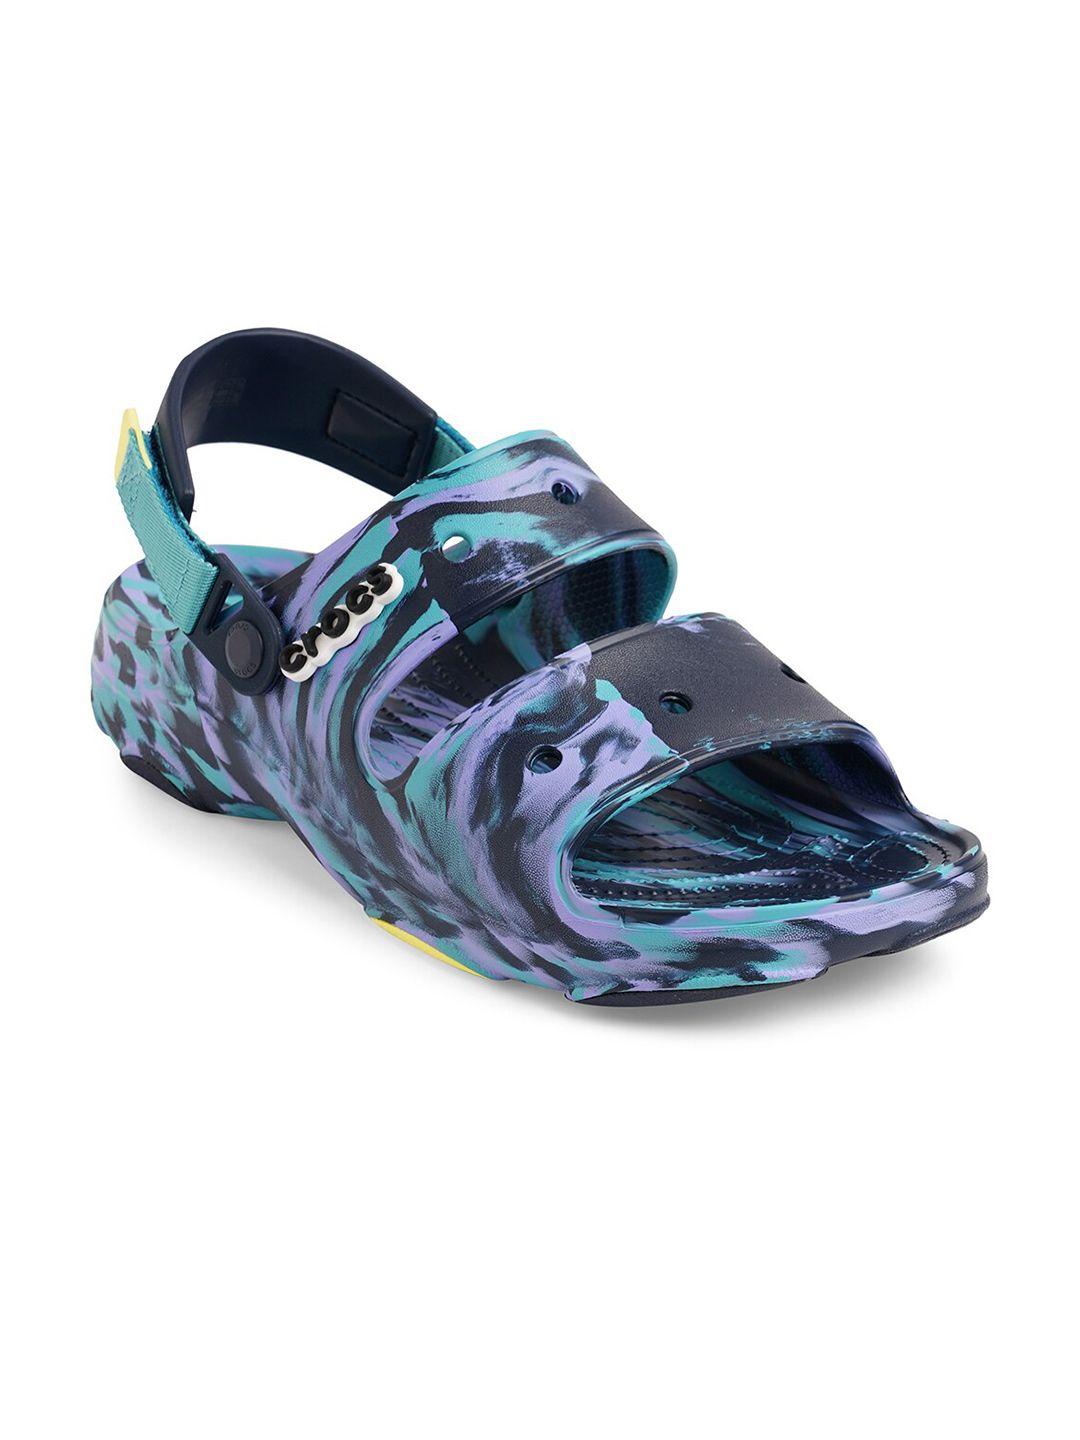 crocs unisex blue & black comfort sandals